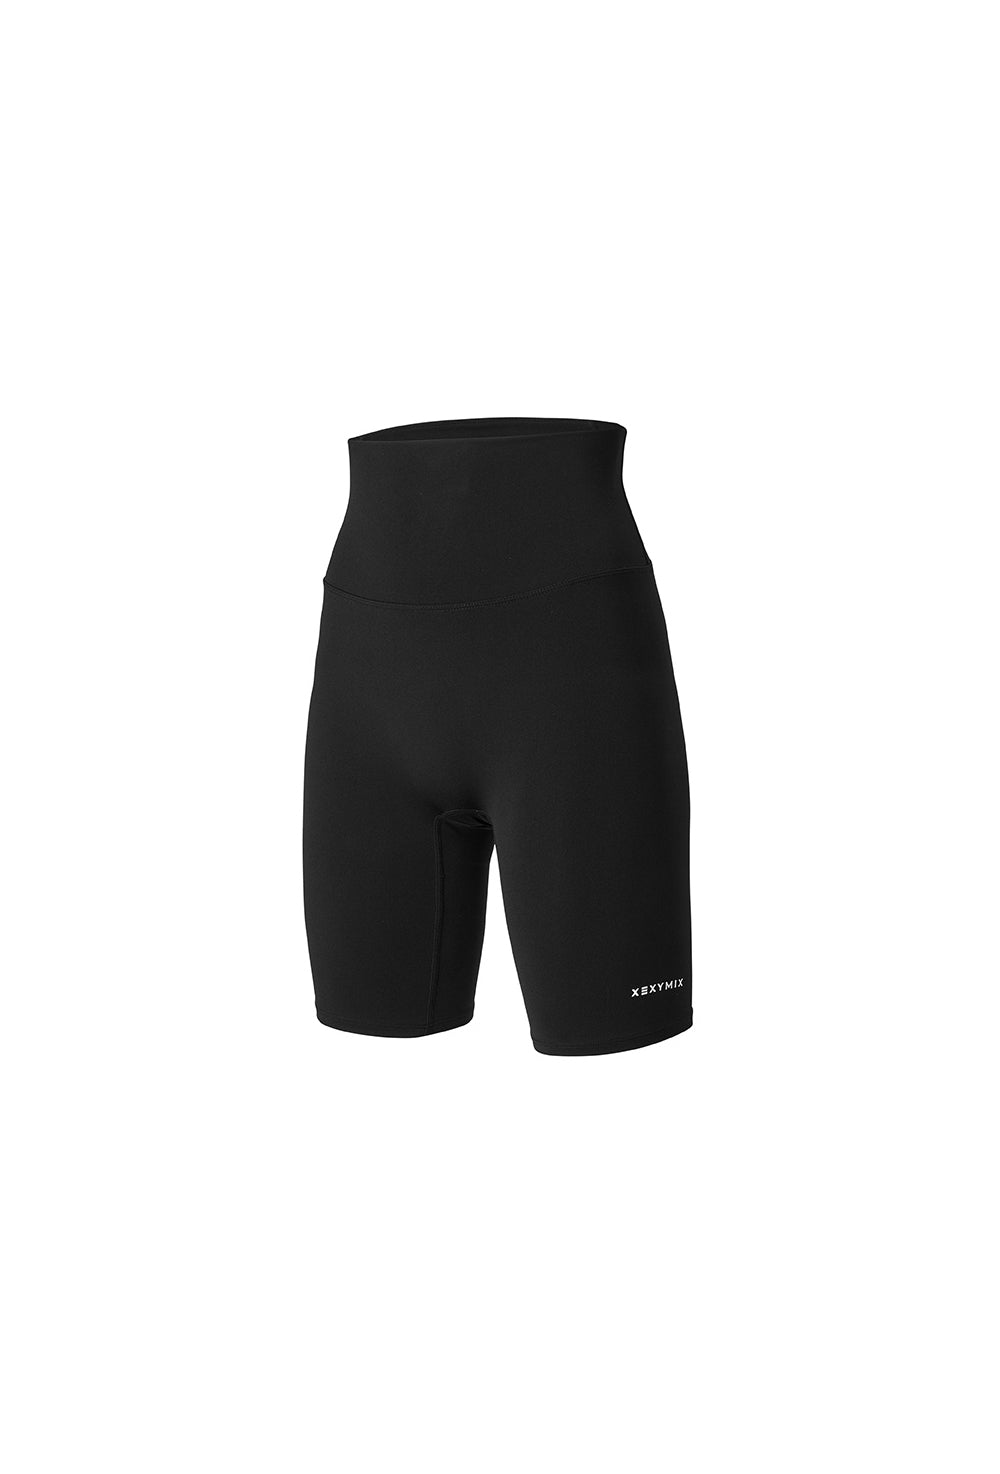 Black Label 360N Leggings 4.5 Shorts - Black